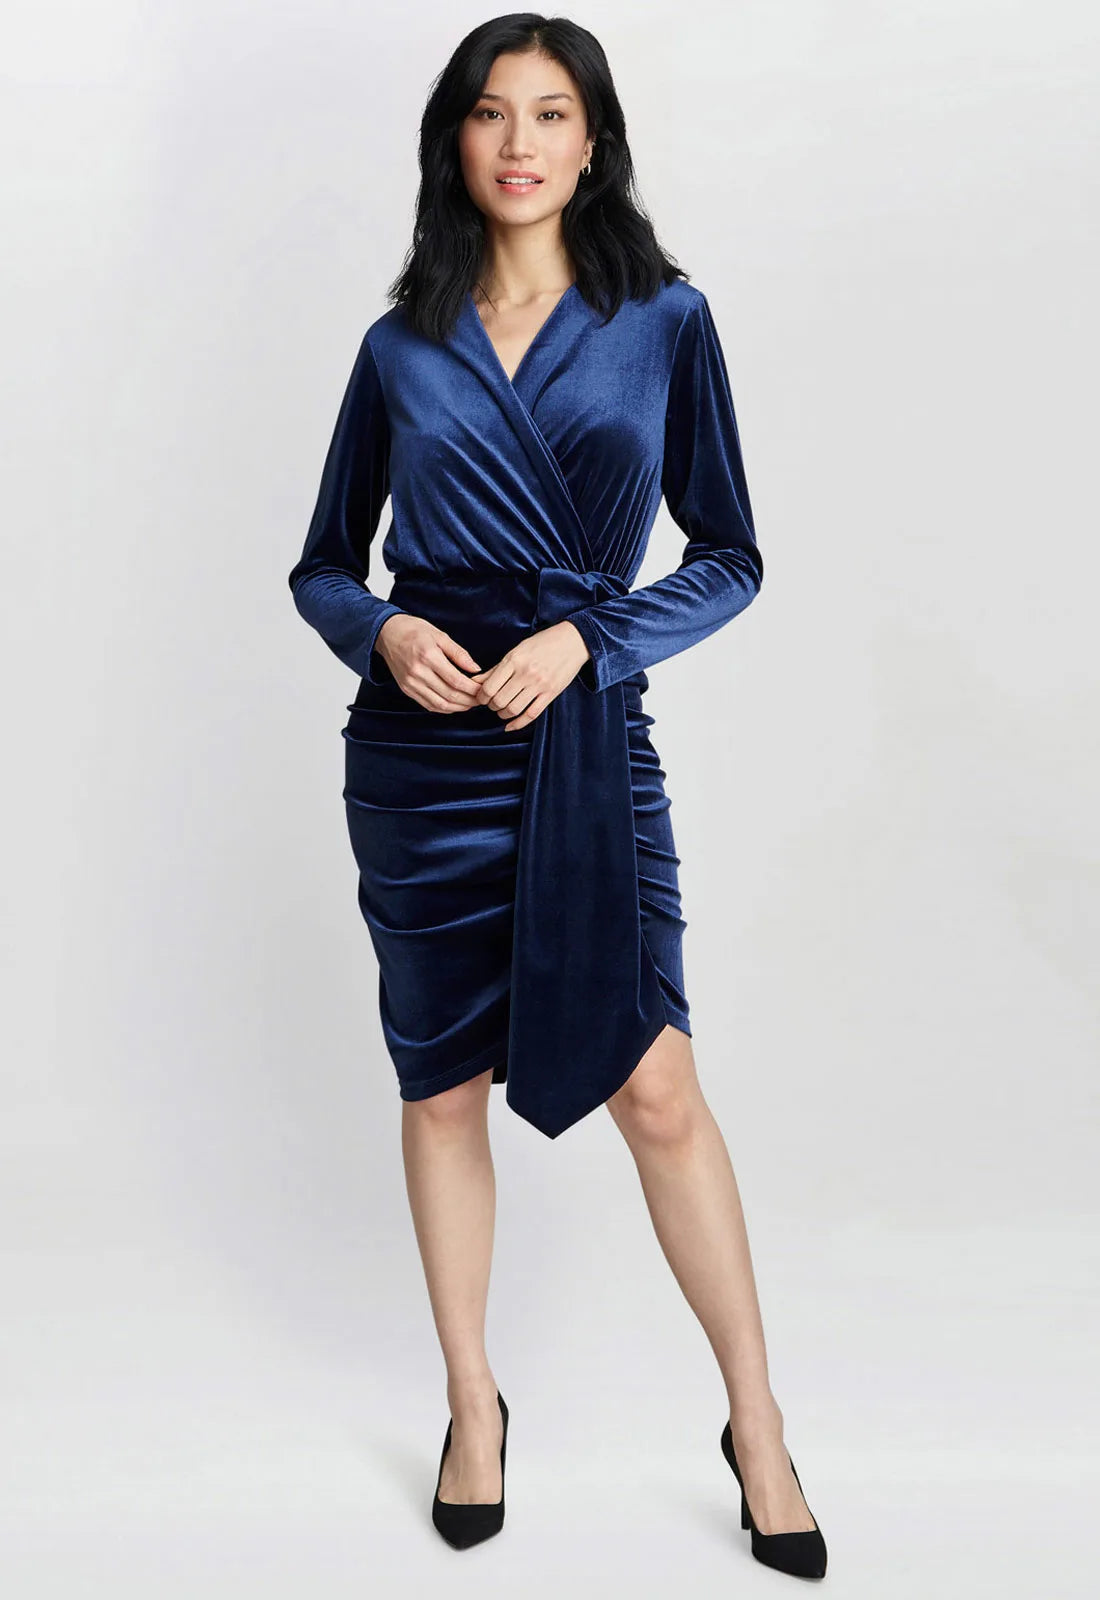 Gina Bacconi Blue Tasha Velvet Dress